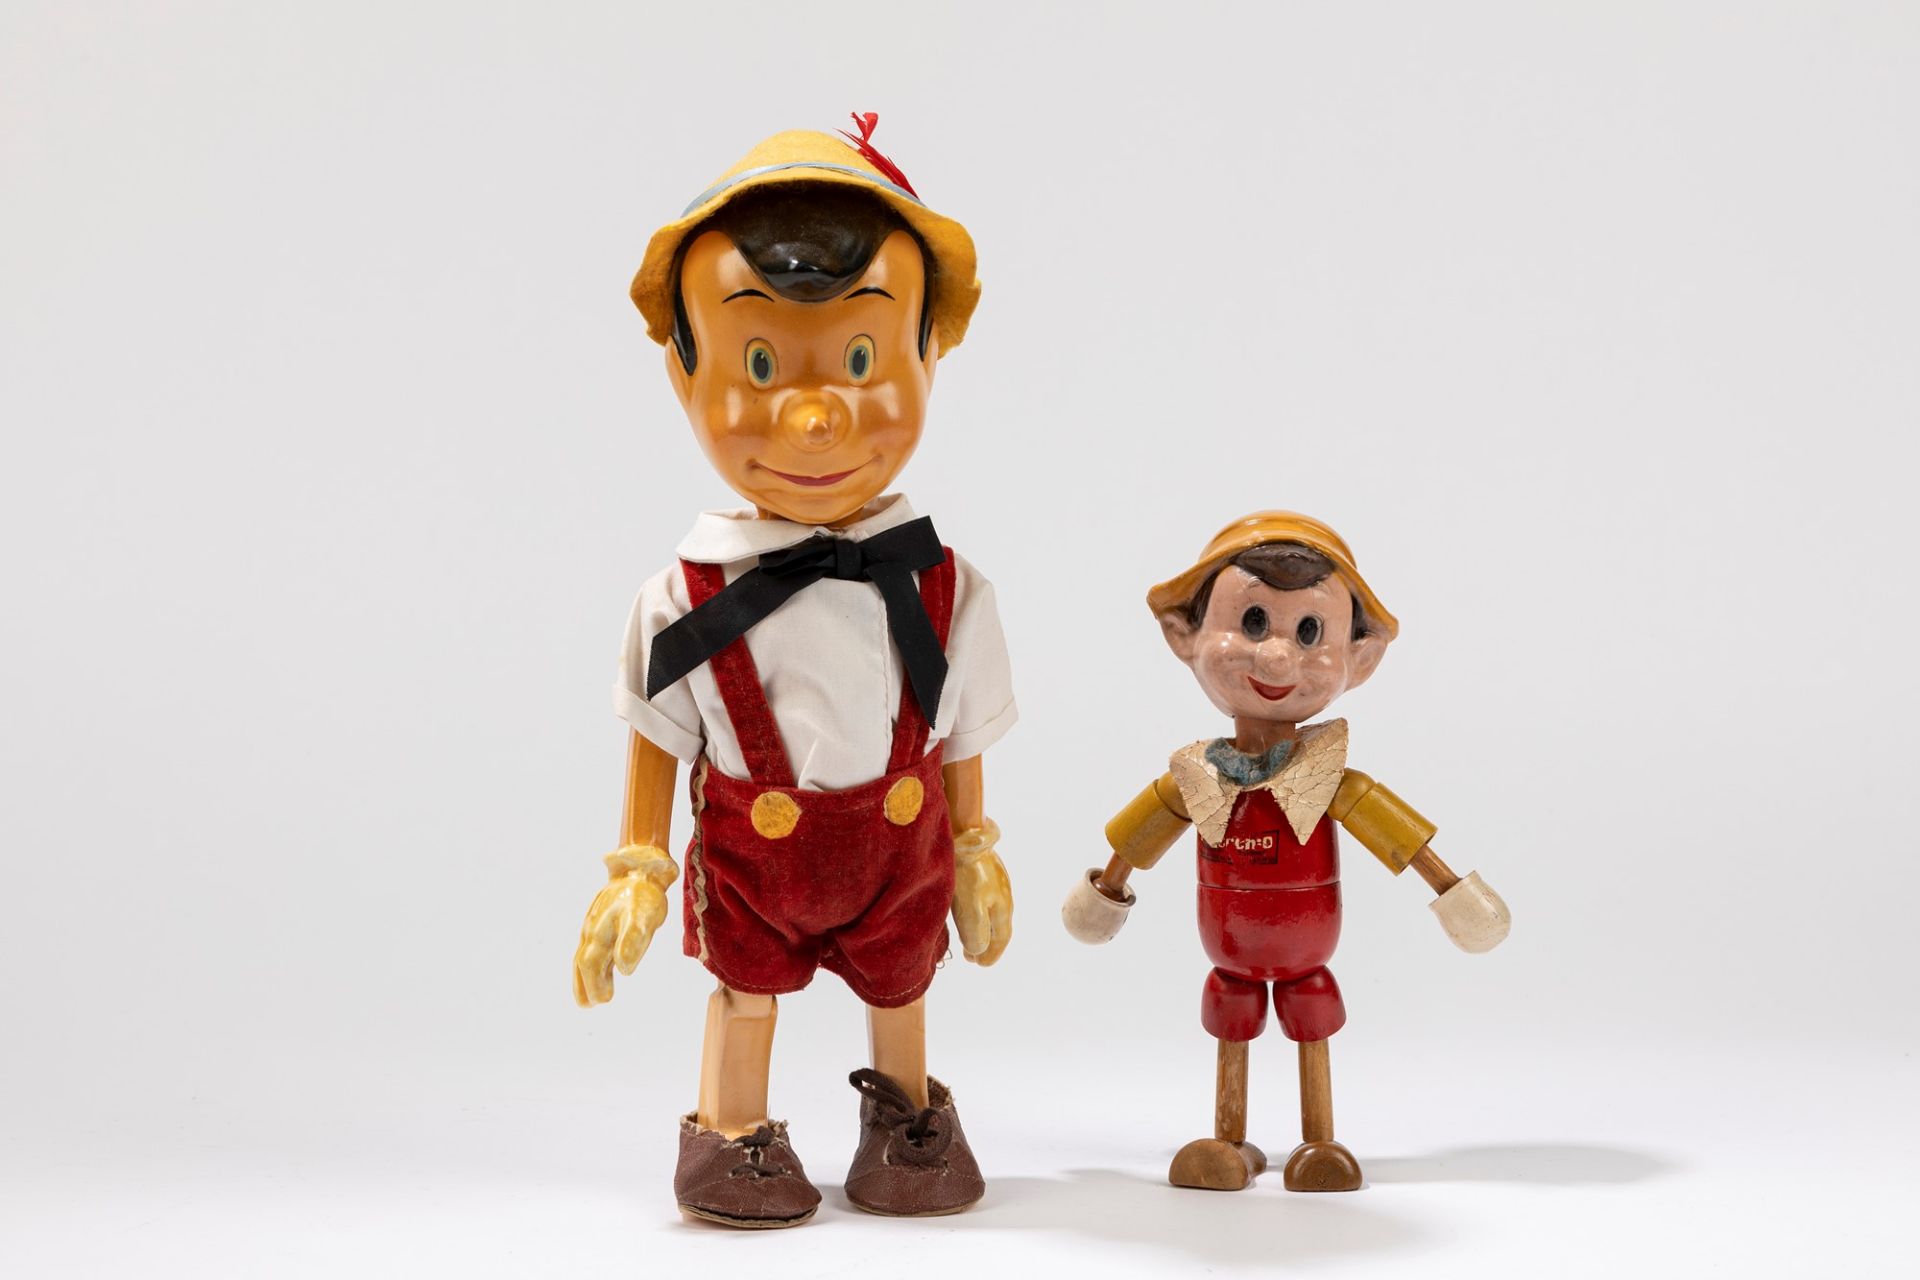 Two "Pinocchio"